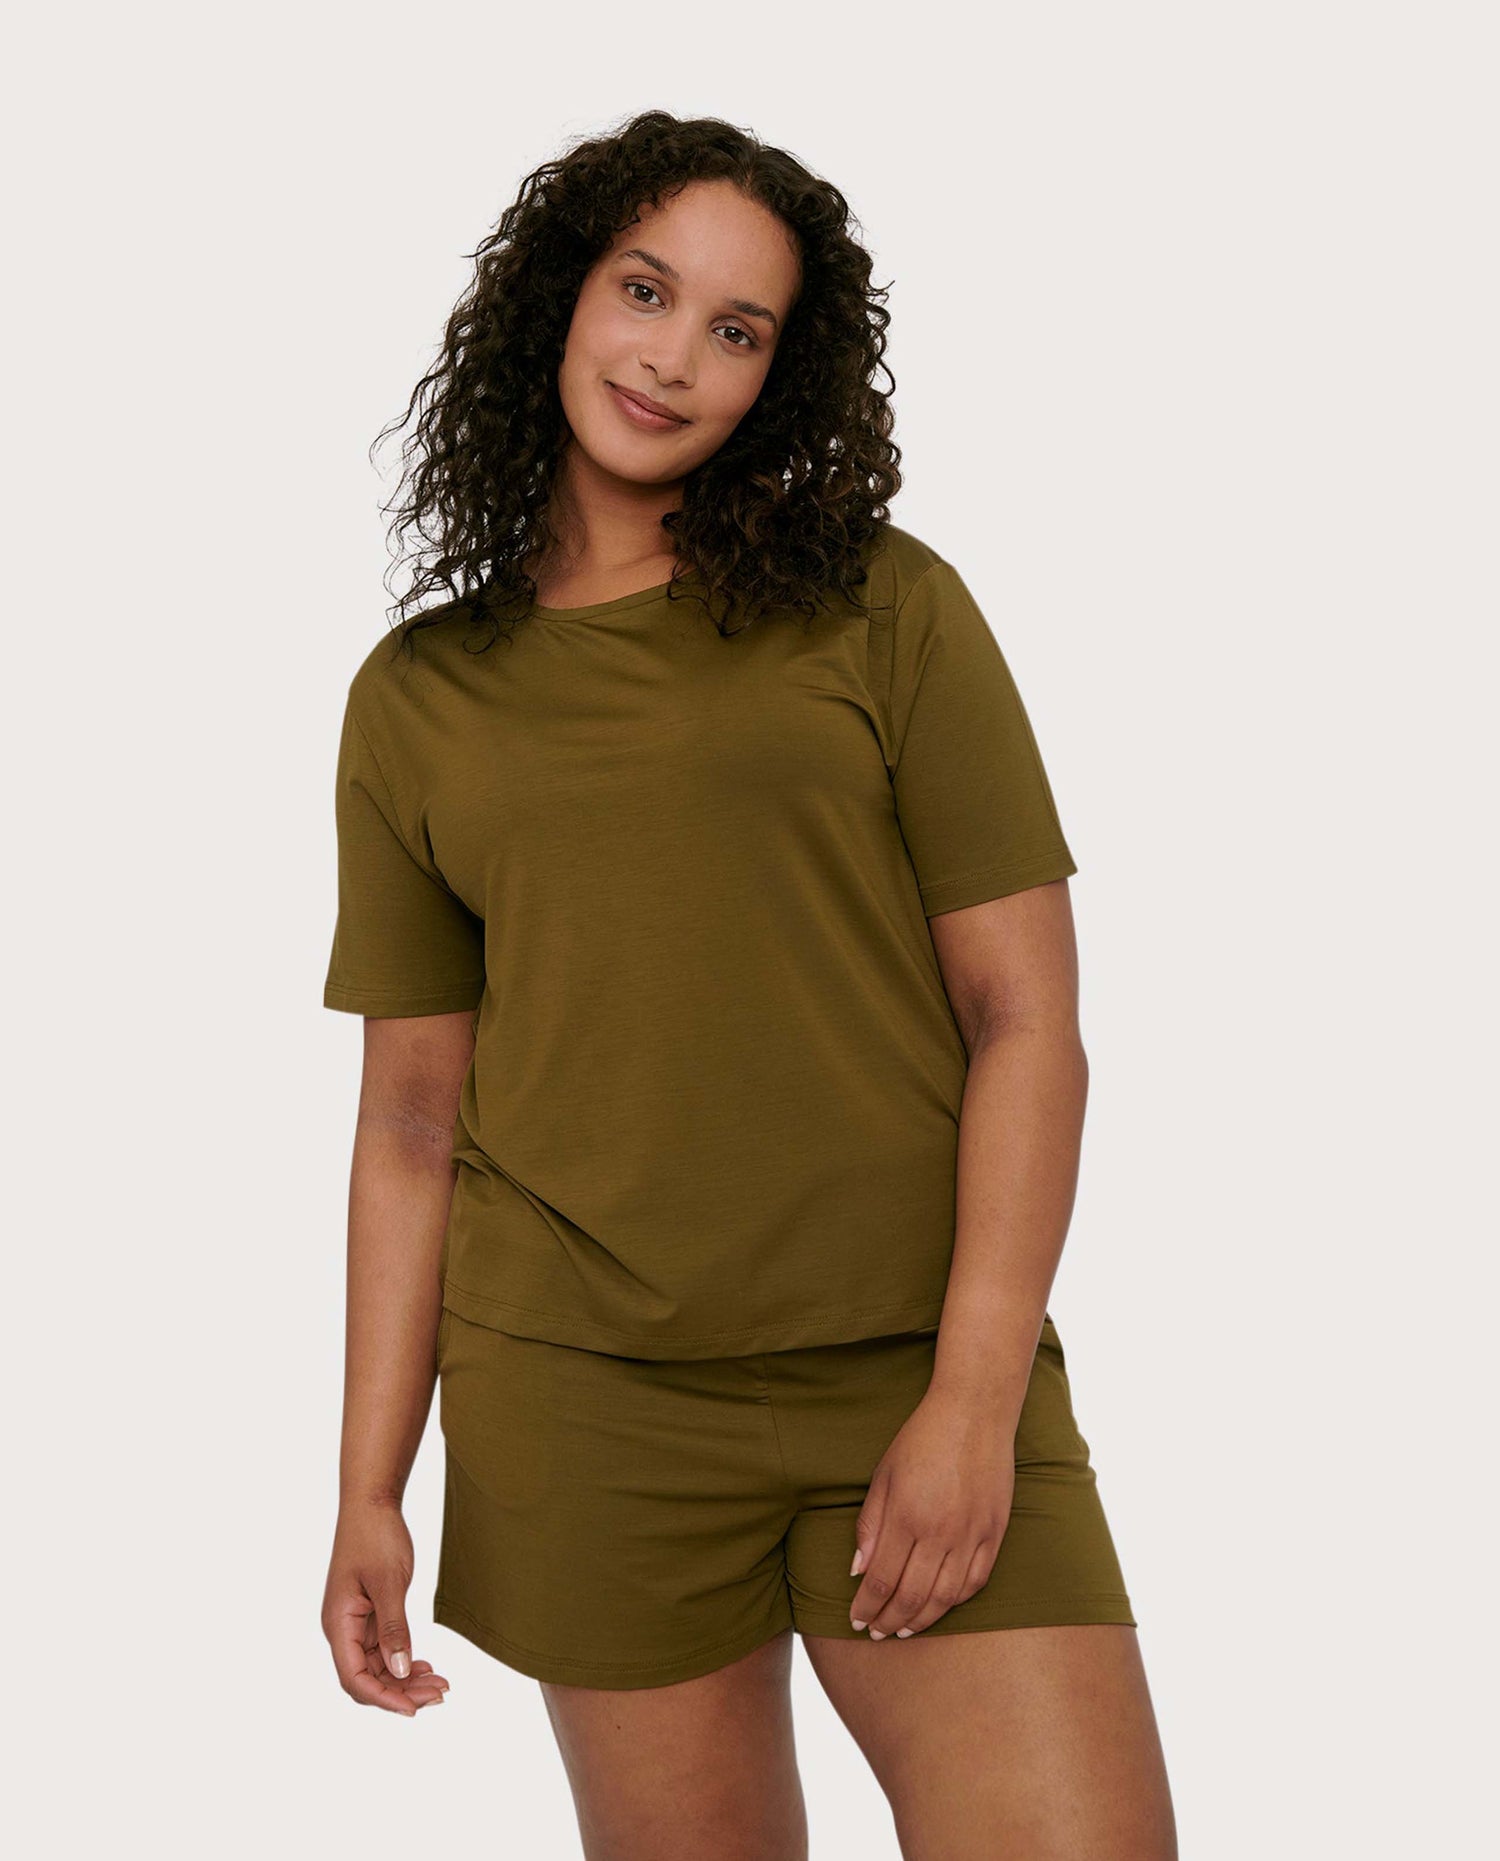 marché commun organic basics femme t-shirt tencel naturel manches courtes vert olive kaki